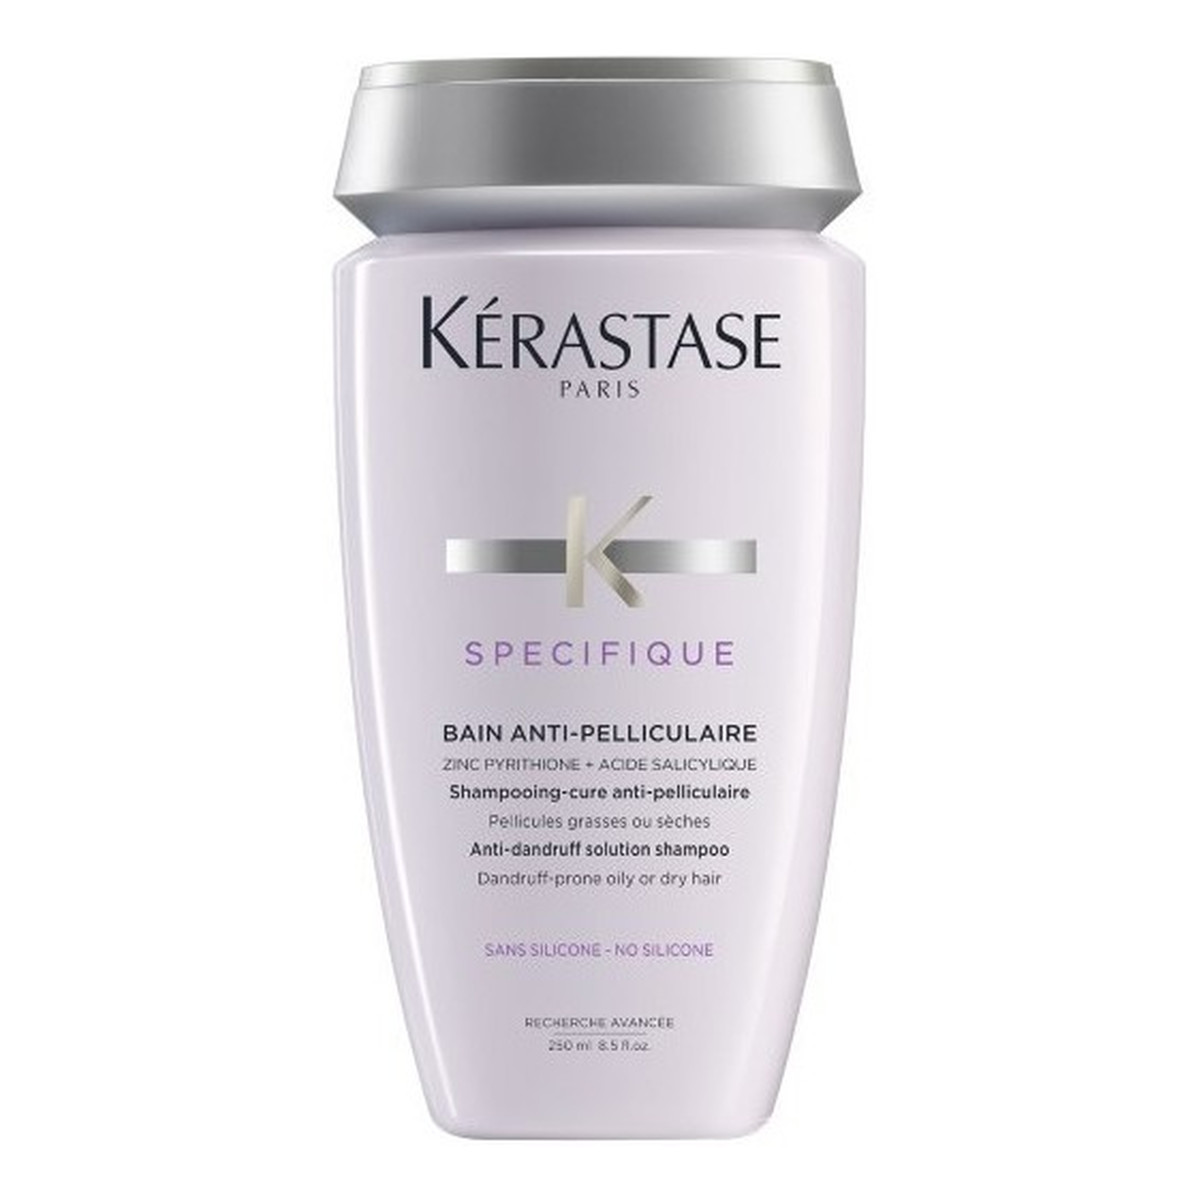 Kerastase Specifique Bain Anti-Pelliculaire Anti-Dandruff Solution Shampoo Szampon przeciwłupieżowy 250ml